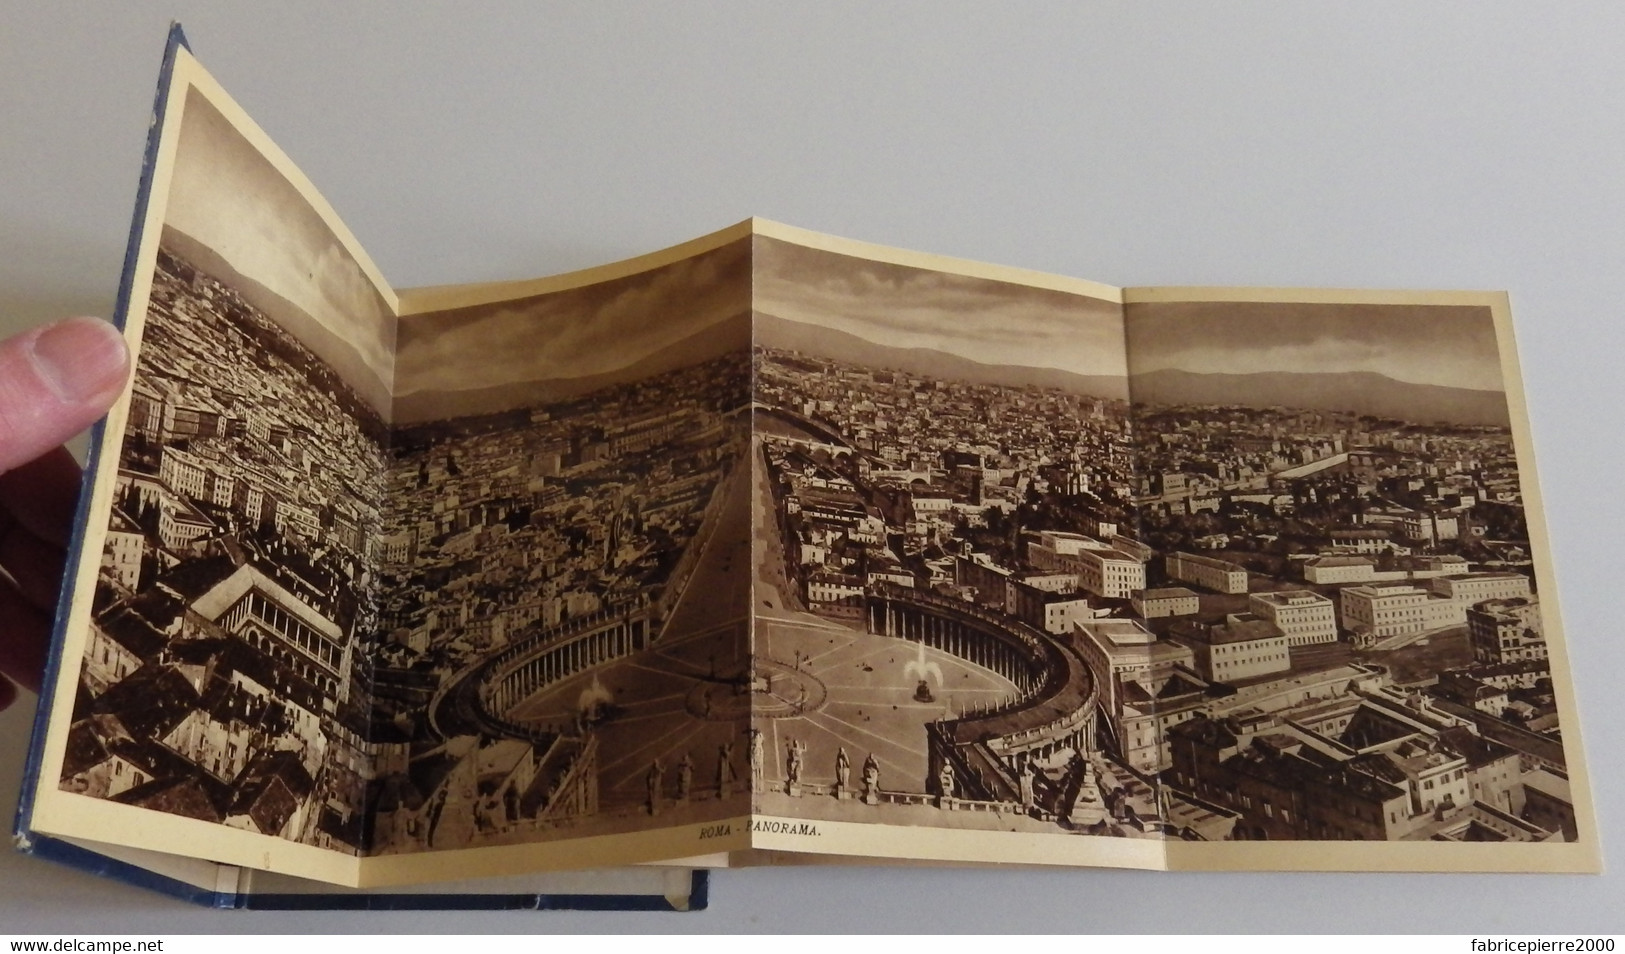 Ricordo di Roma (Souvenir de Rome) 2 albums de vues photographiques en accordéon v.1890 EXCELLENT ETAT